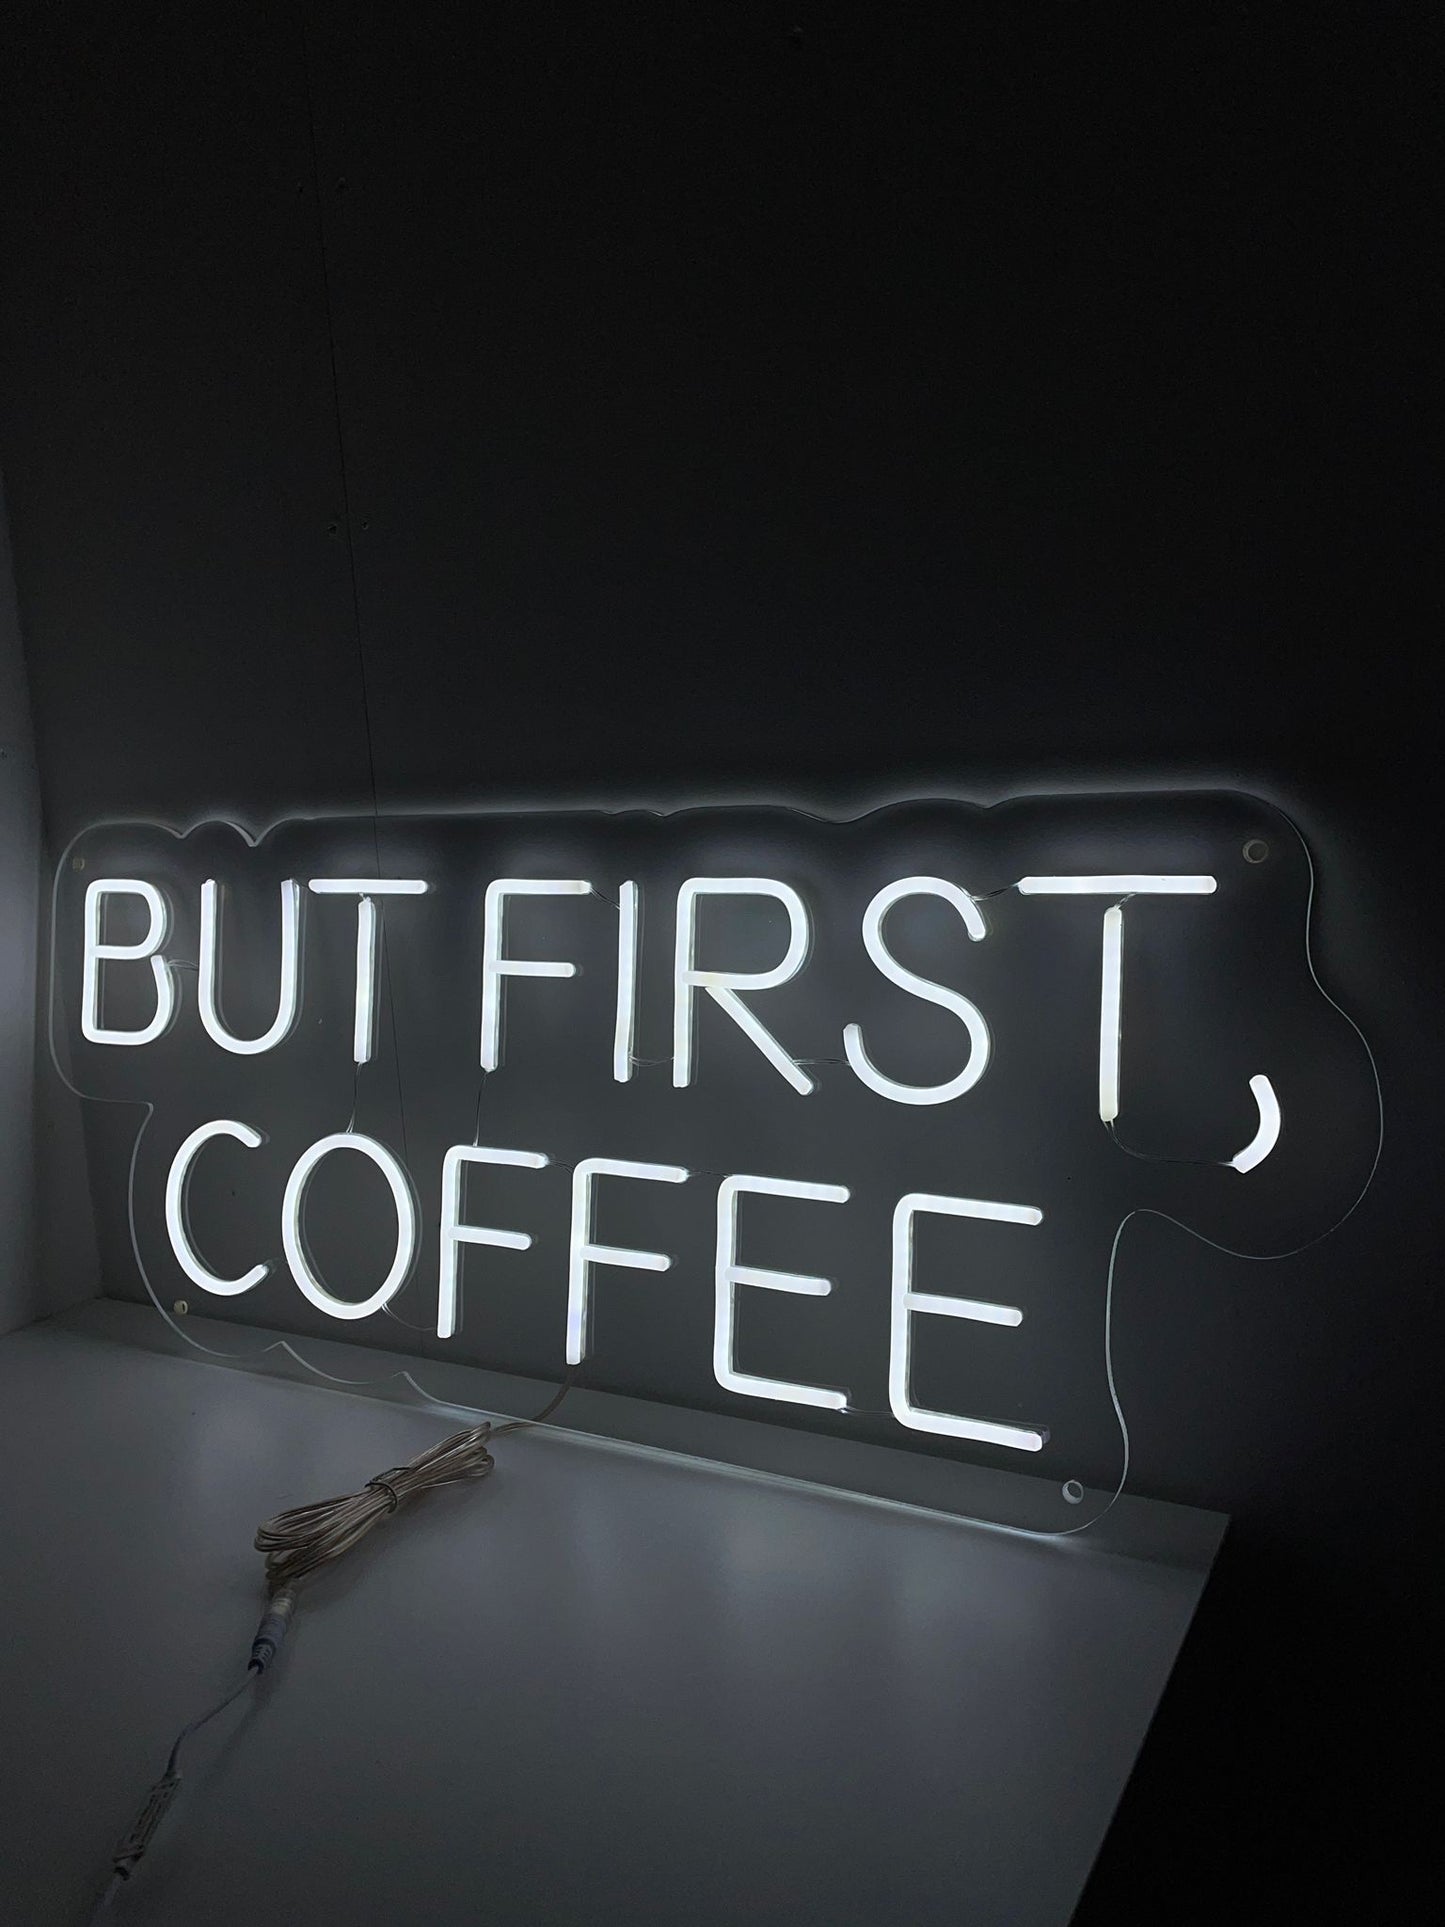 But First, Coffee Sinal de neon